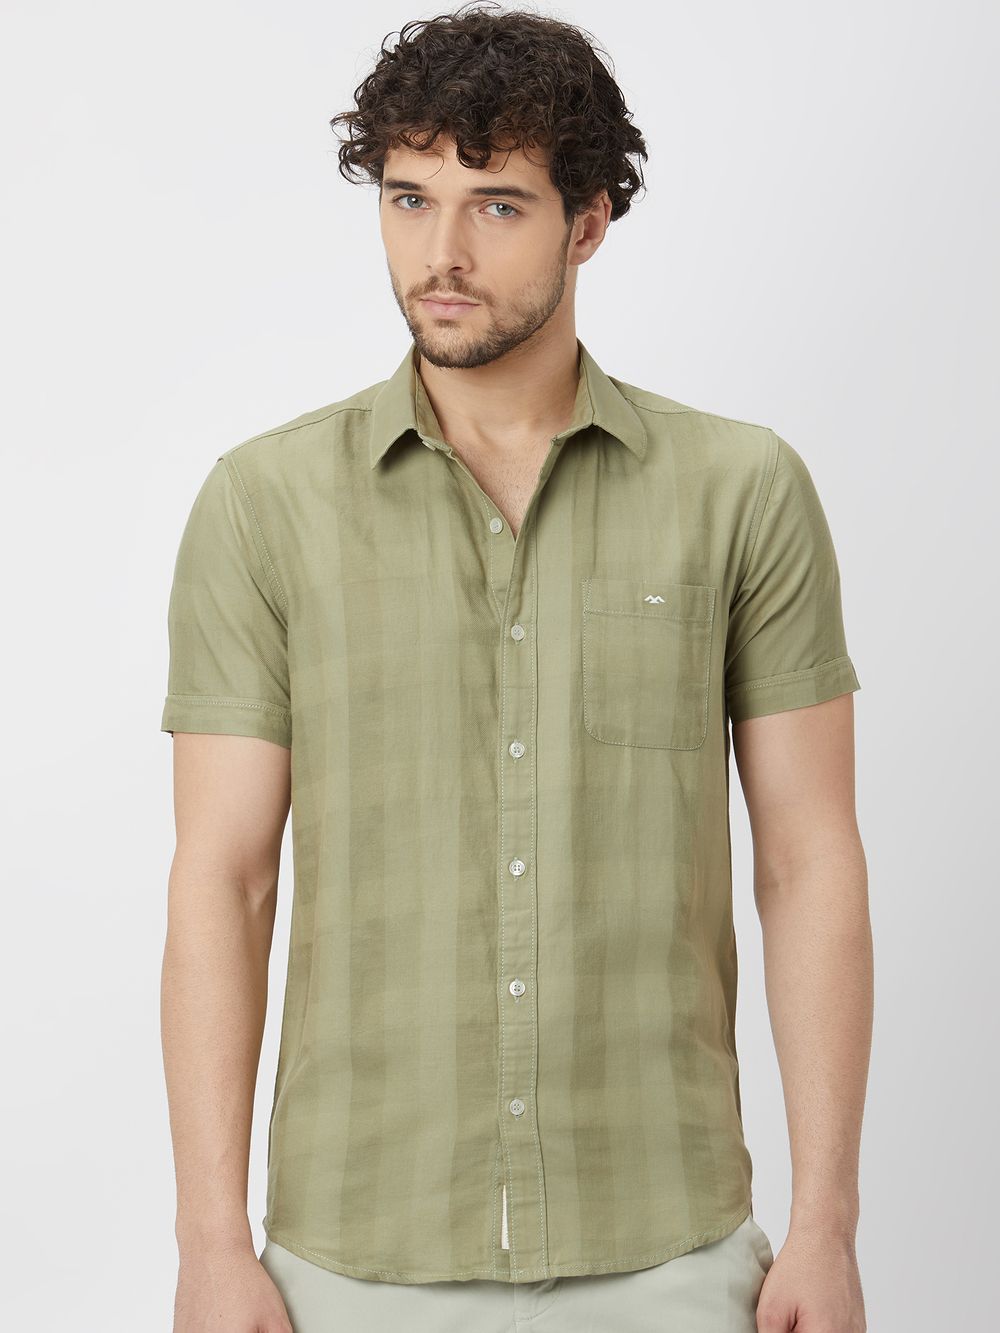 Light Olive Textured Plain Shirt